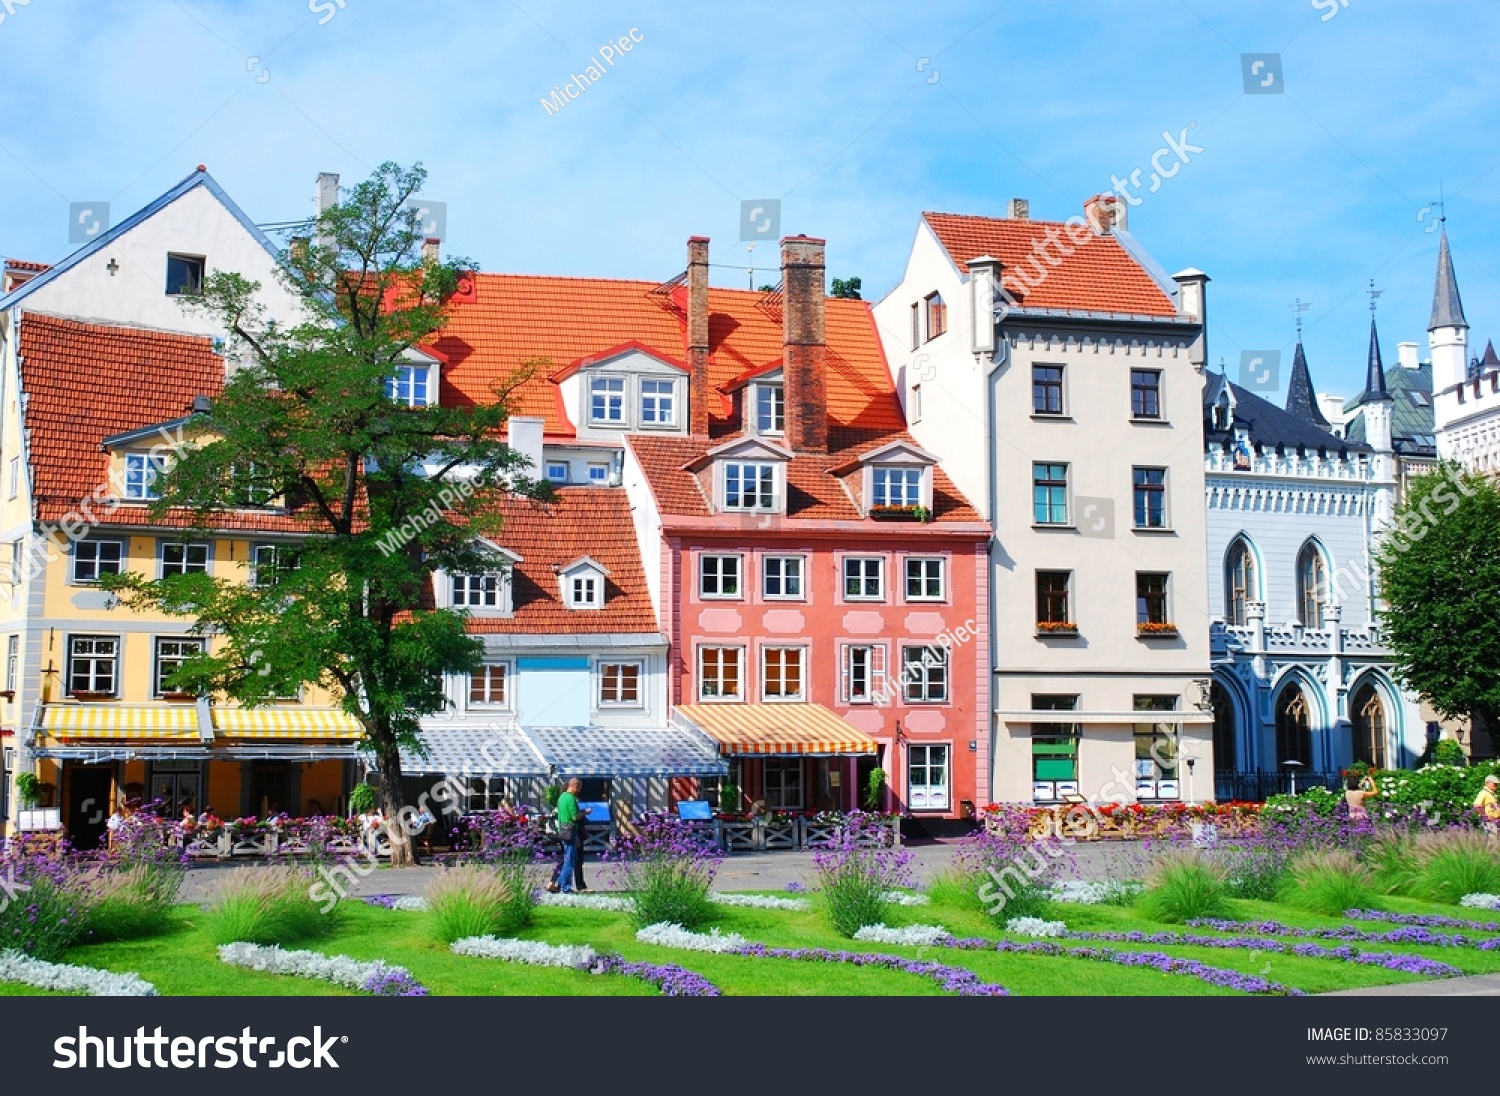 Riga old town, Latvia #85833097